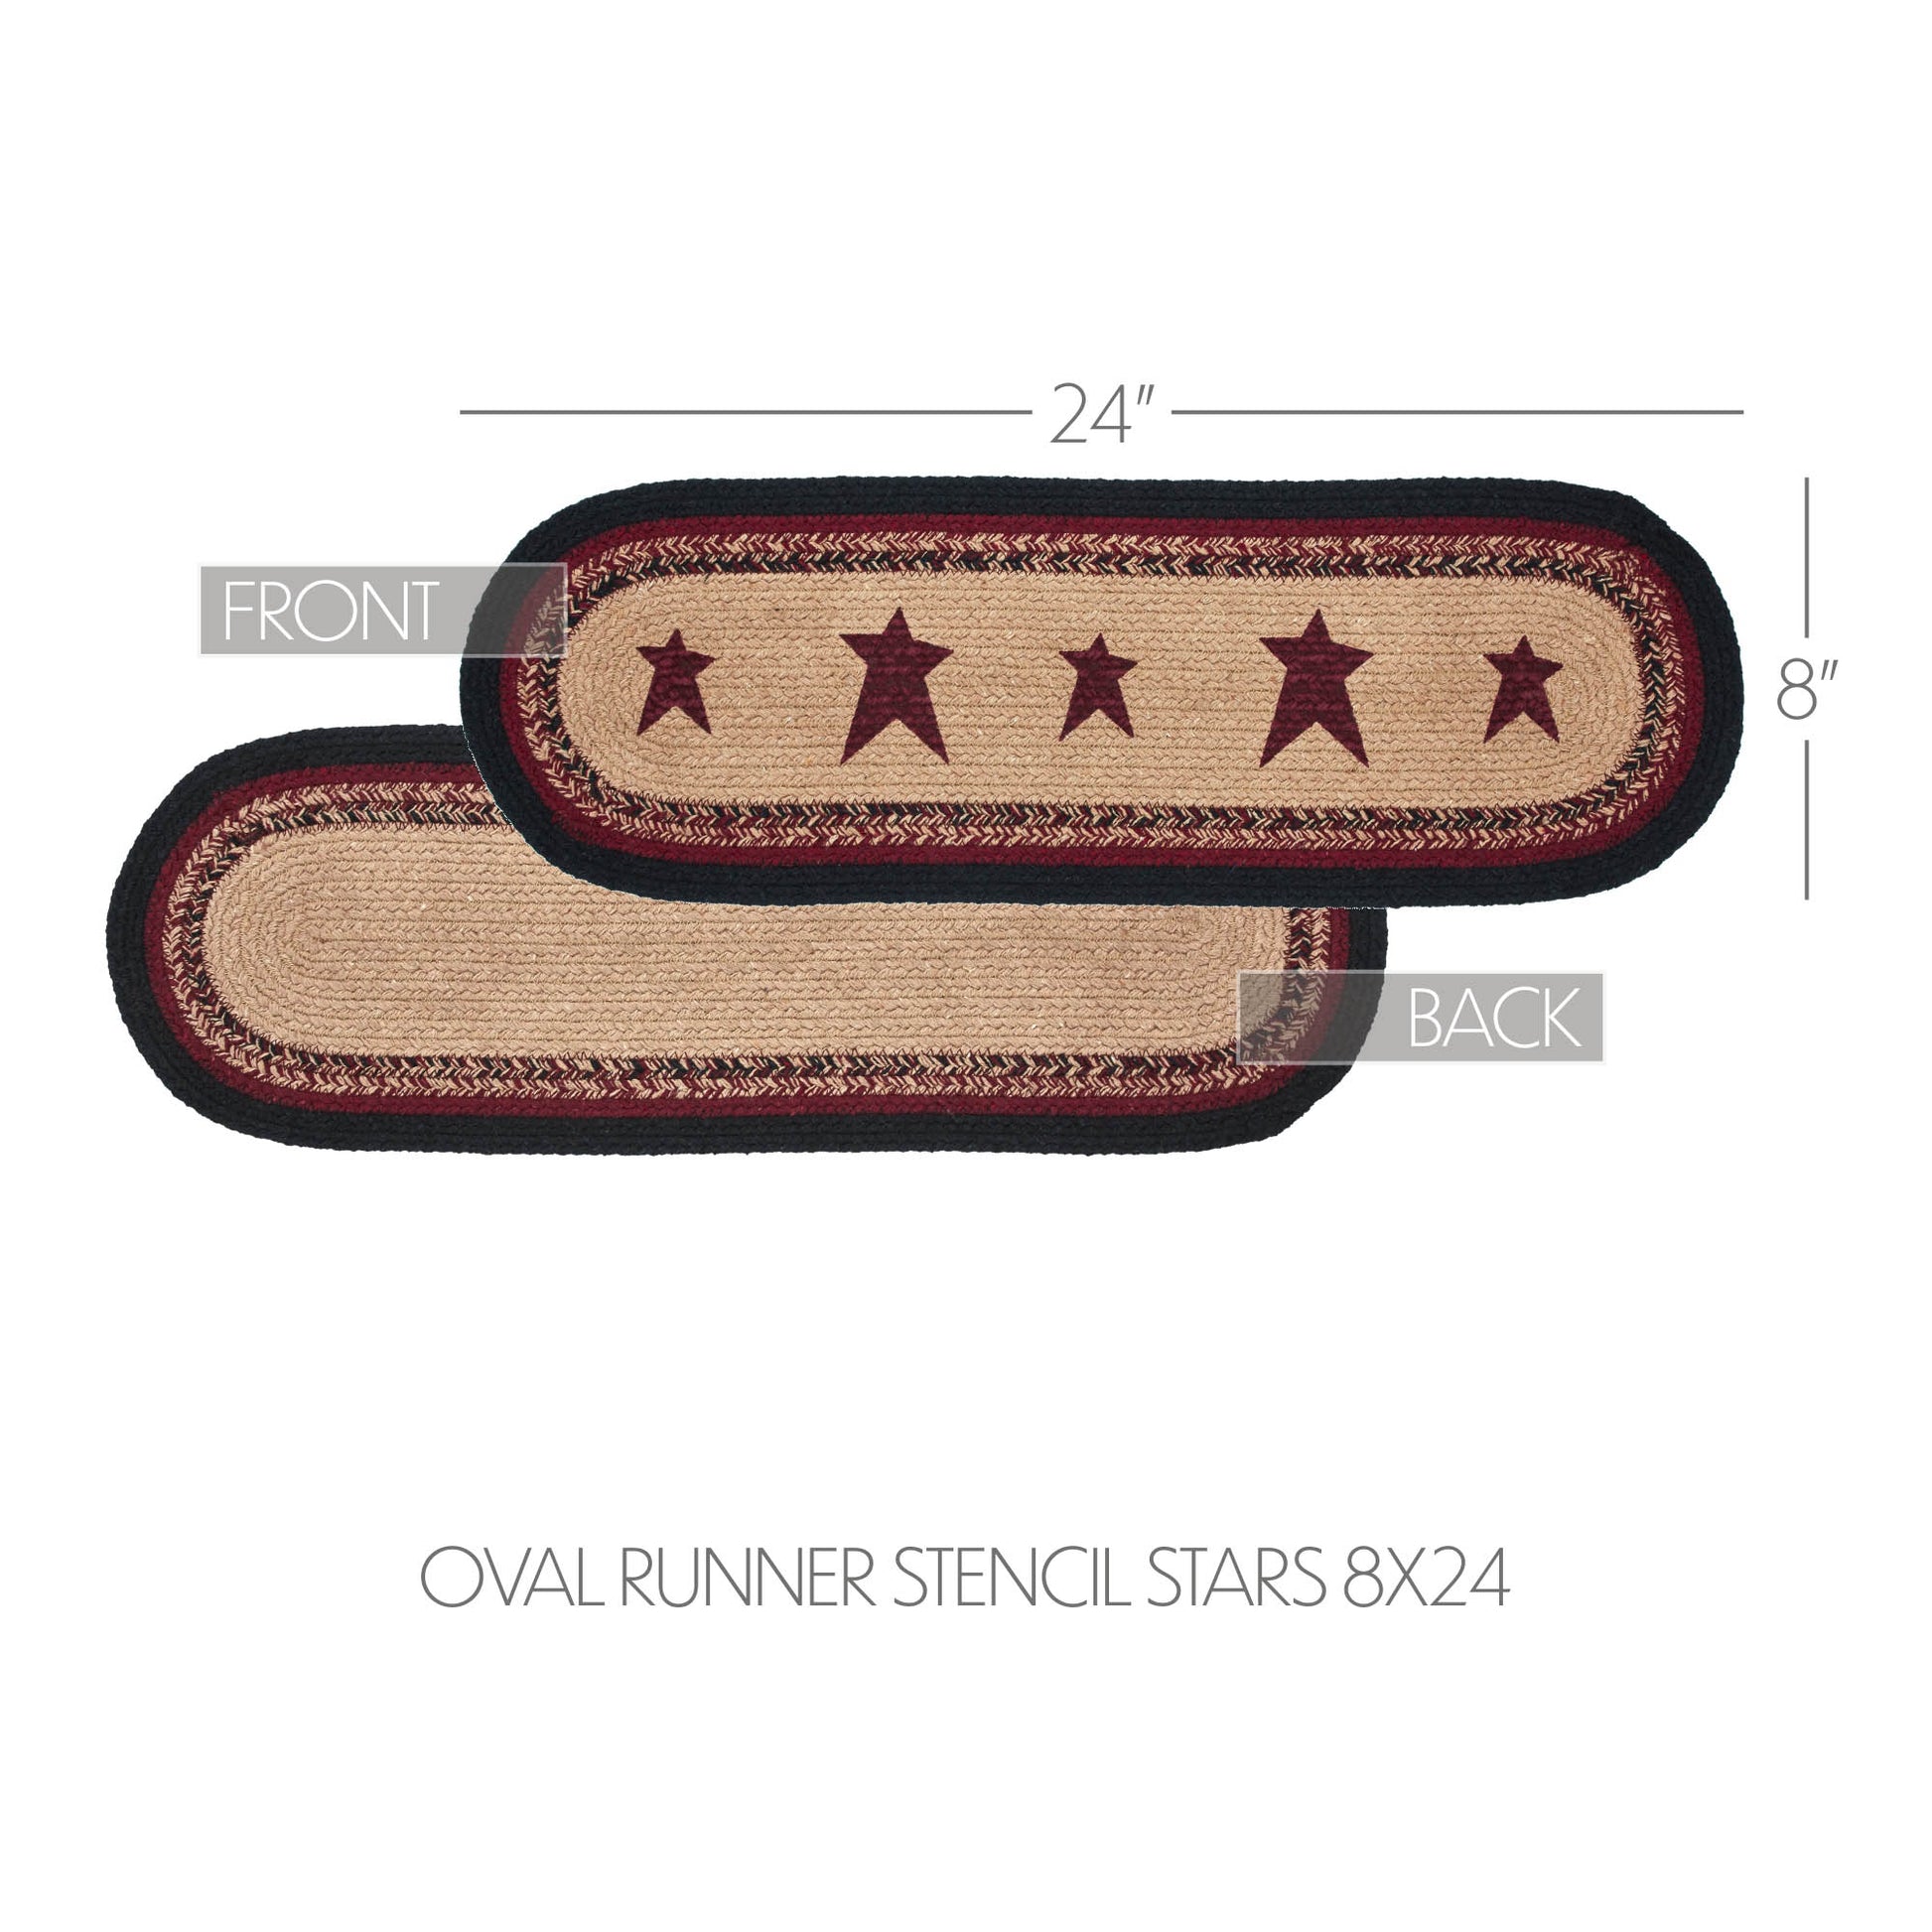 Connell Oval Runner Stencil Stars 8x24 SpadezStore